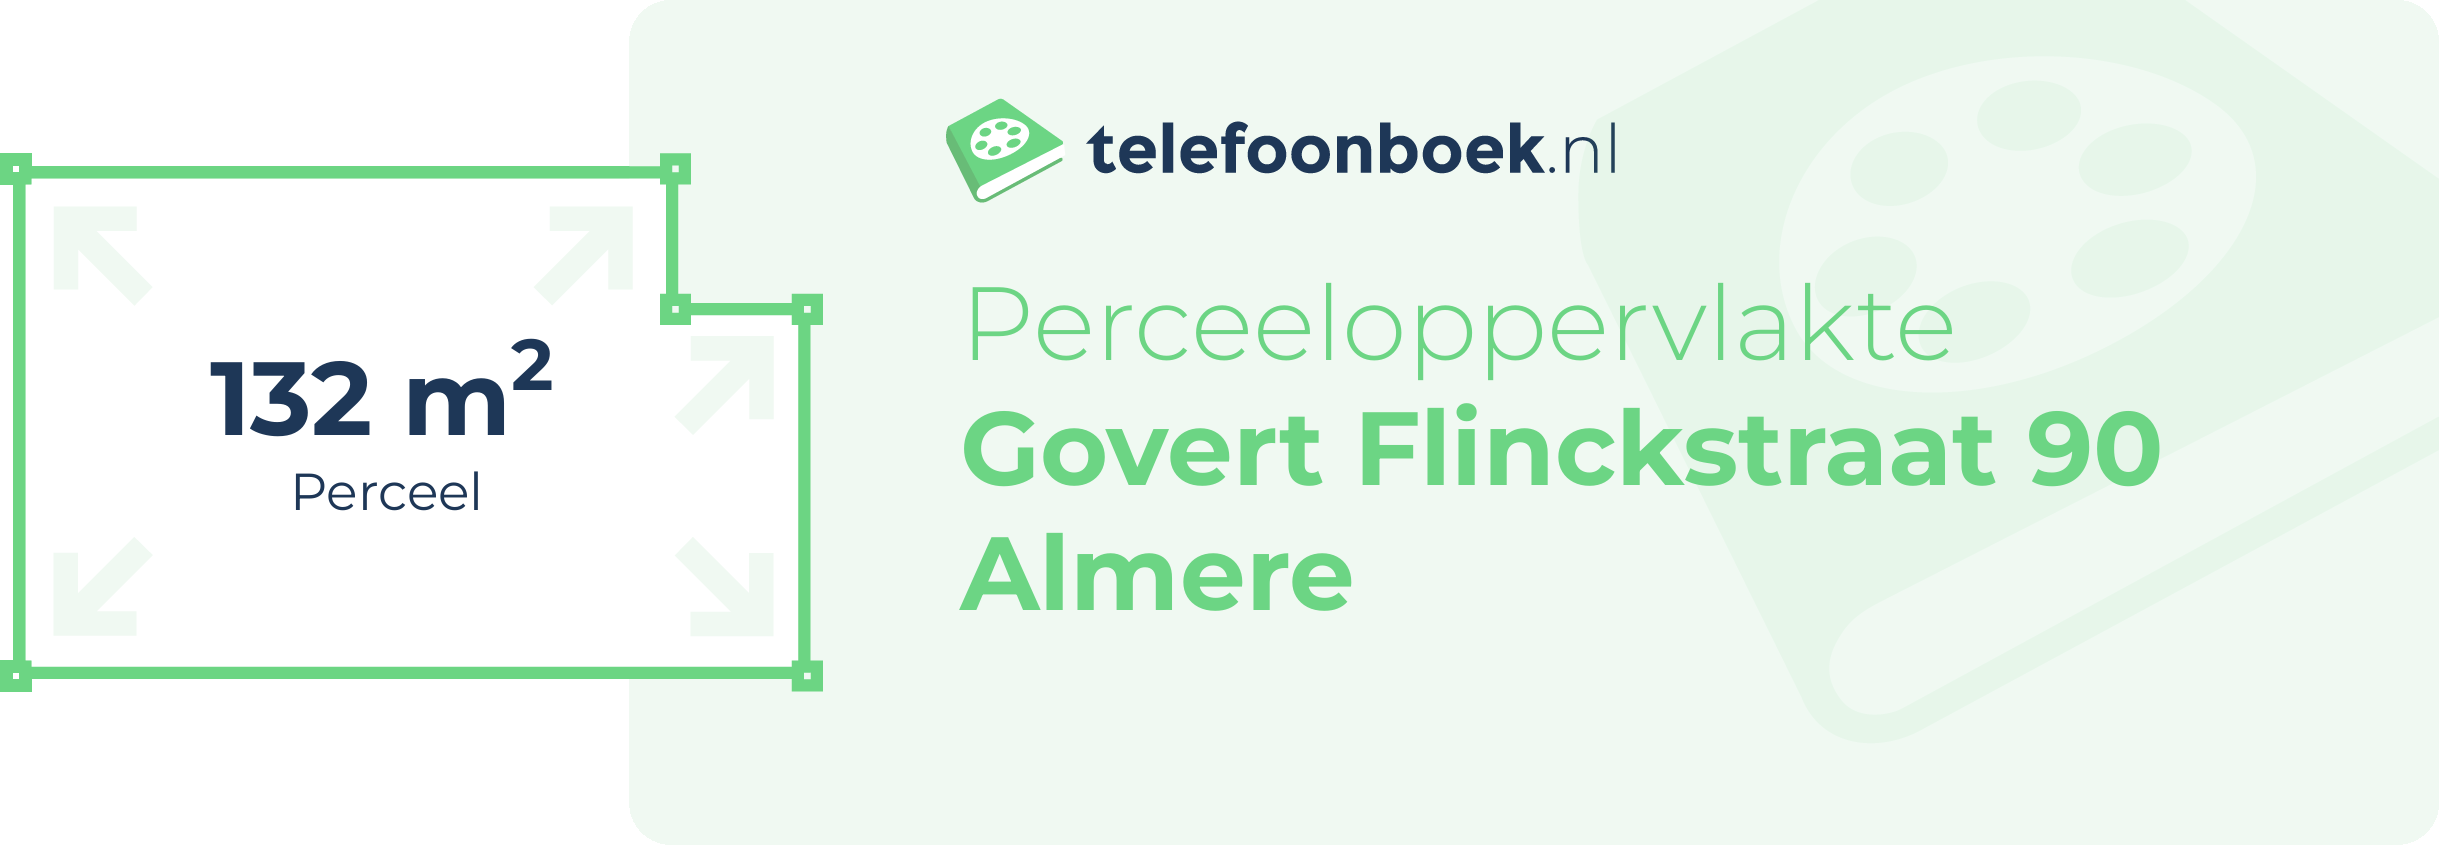 Perceeloppervlakte Govert Flinckstraat 90 Almere